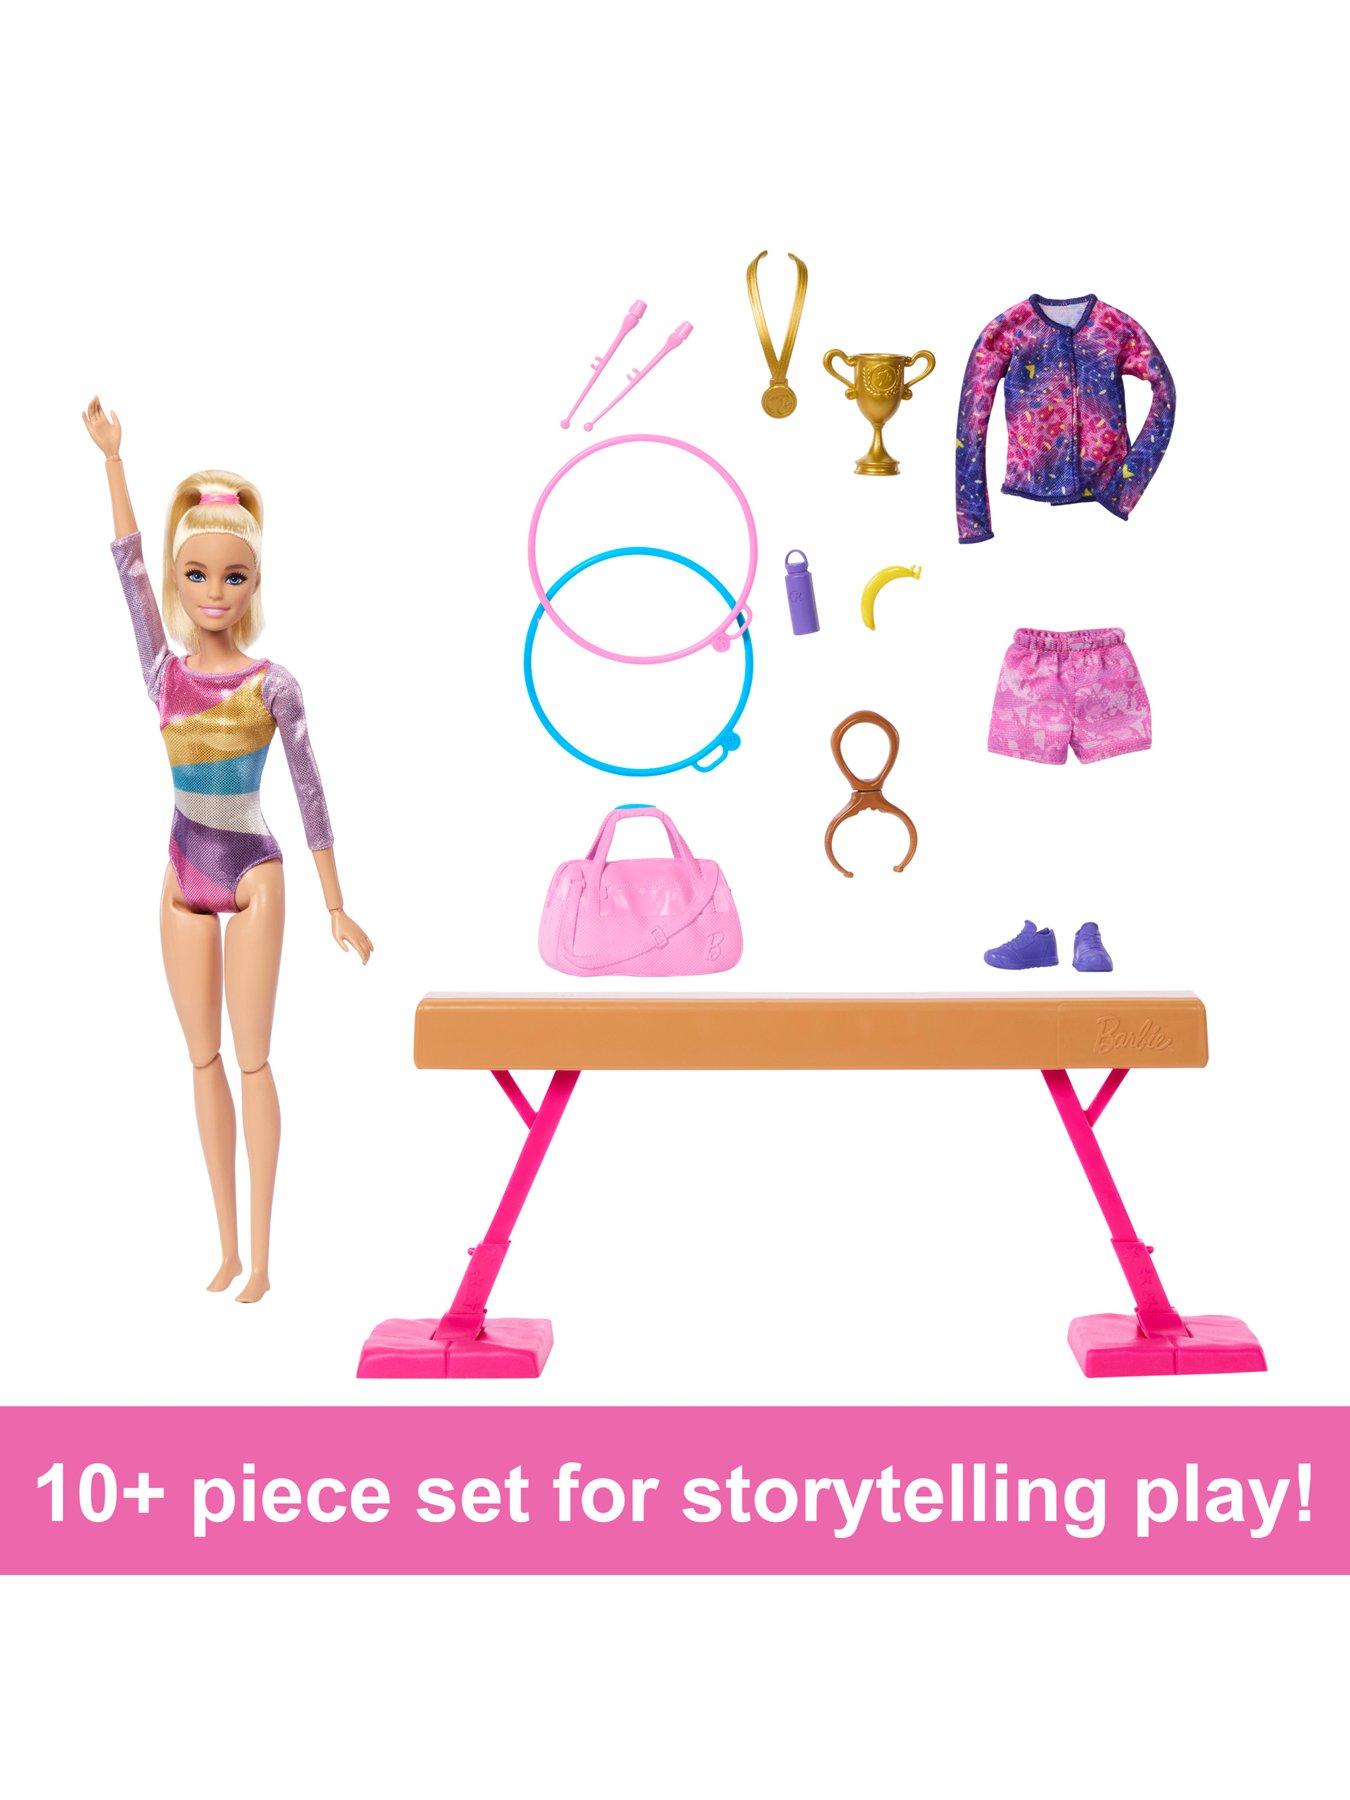 Barbie Rhythmic Gymnast with Colorful Metallic Leotard, 2 Batons